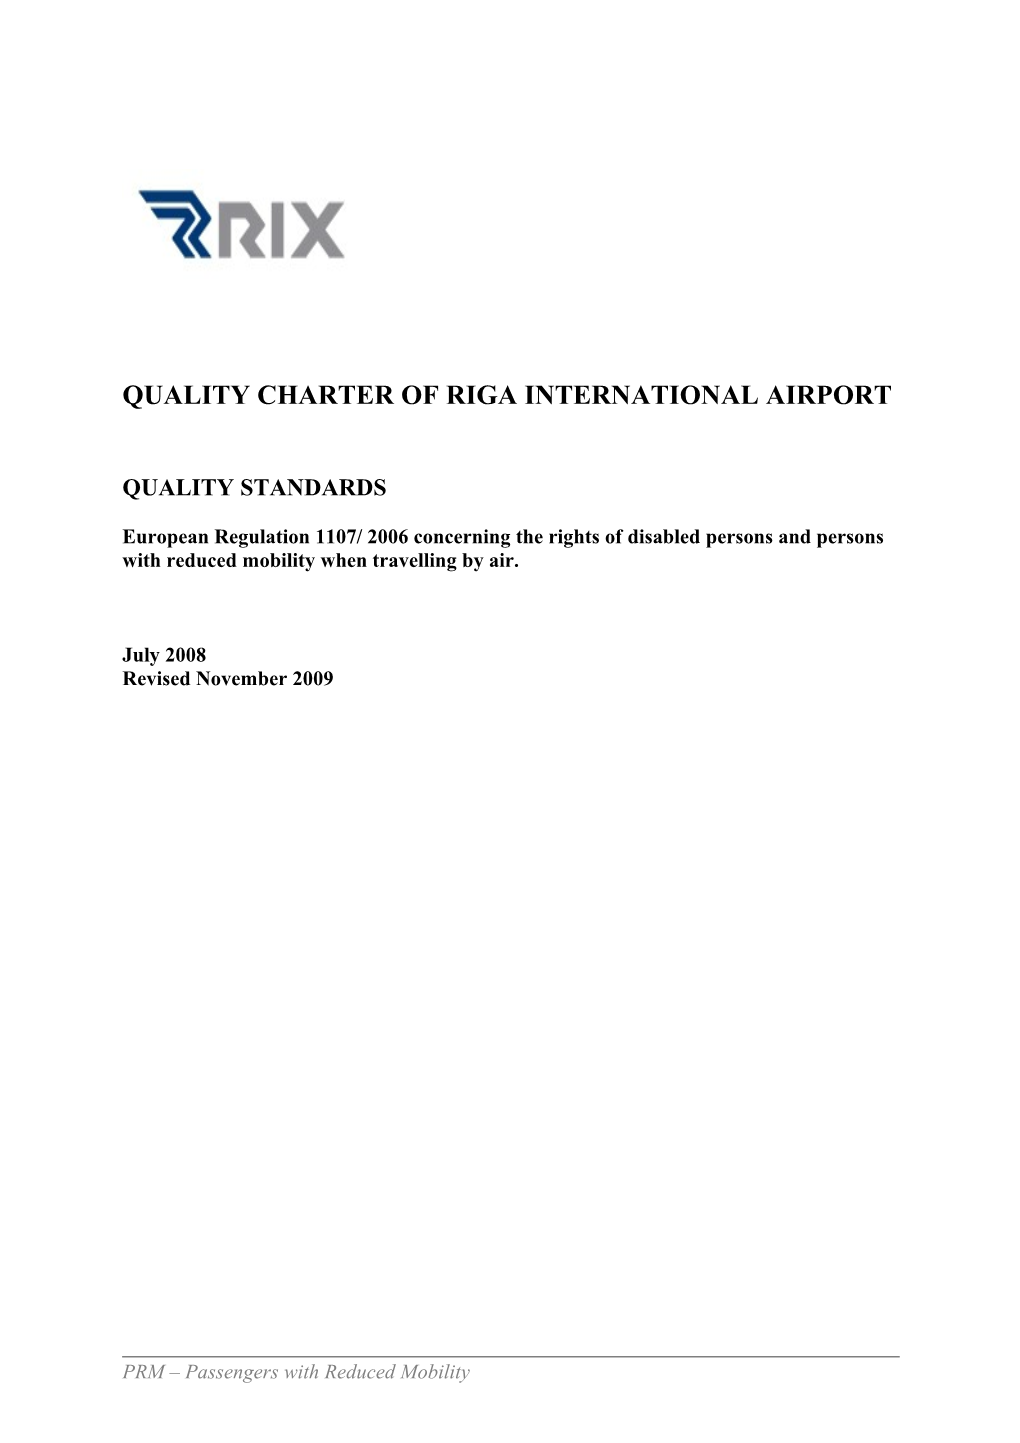 Service Level Agreement of Riga International Airport